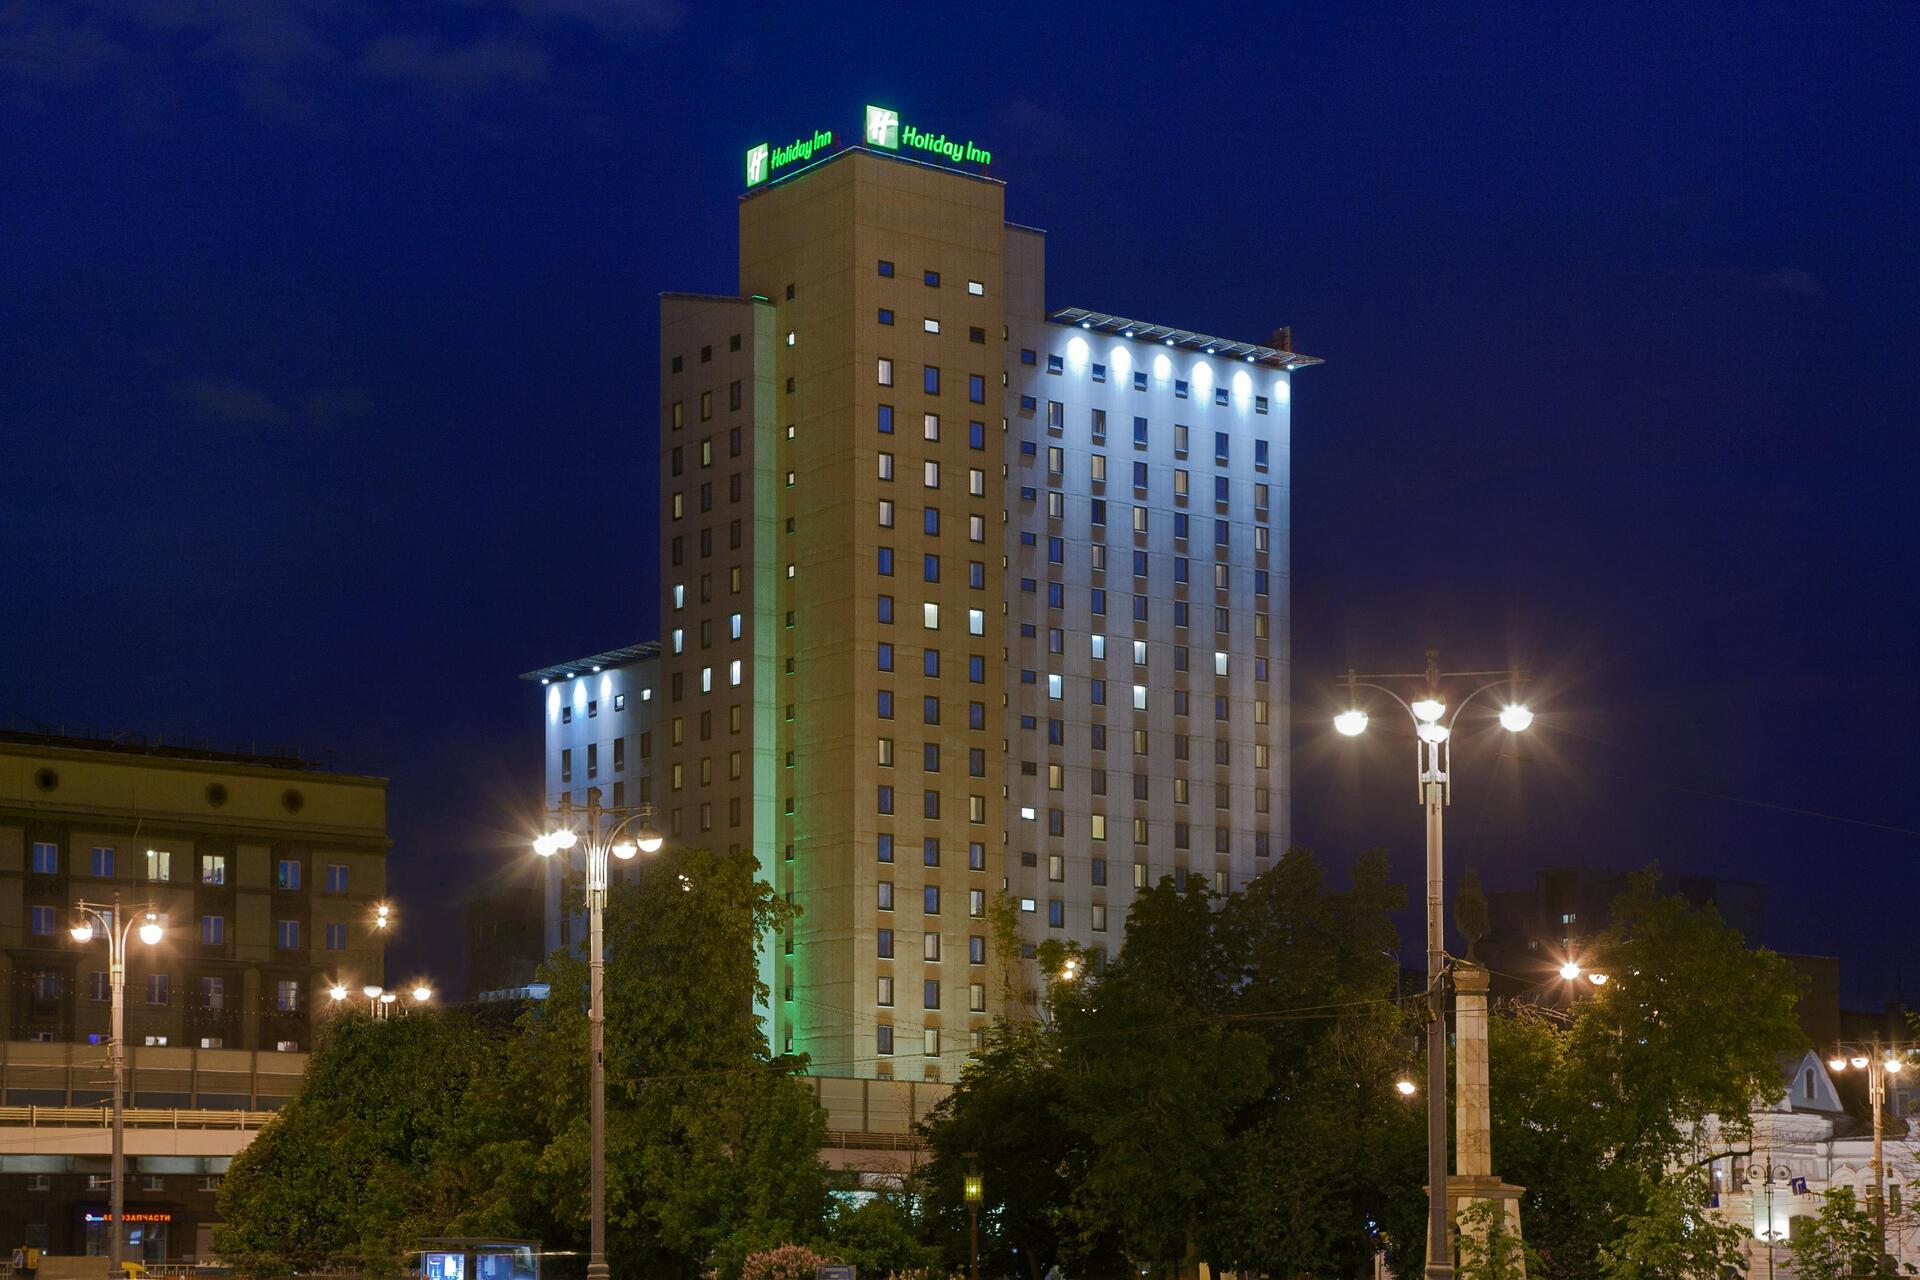 Holiday Inn Suschevsky Hotel: General view